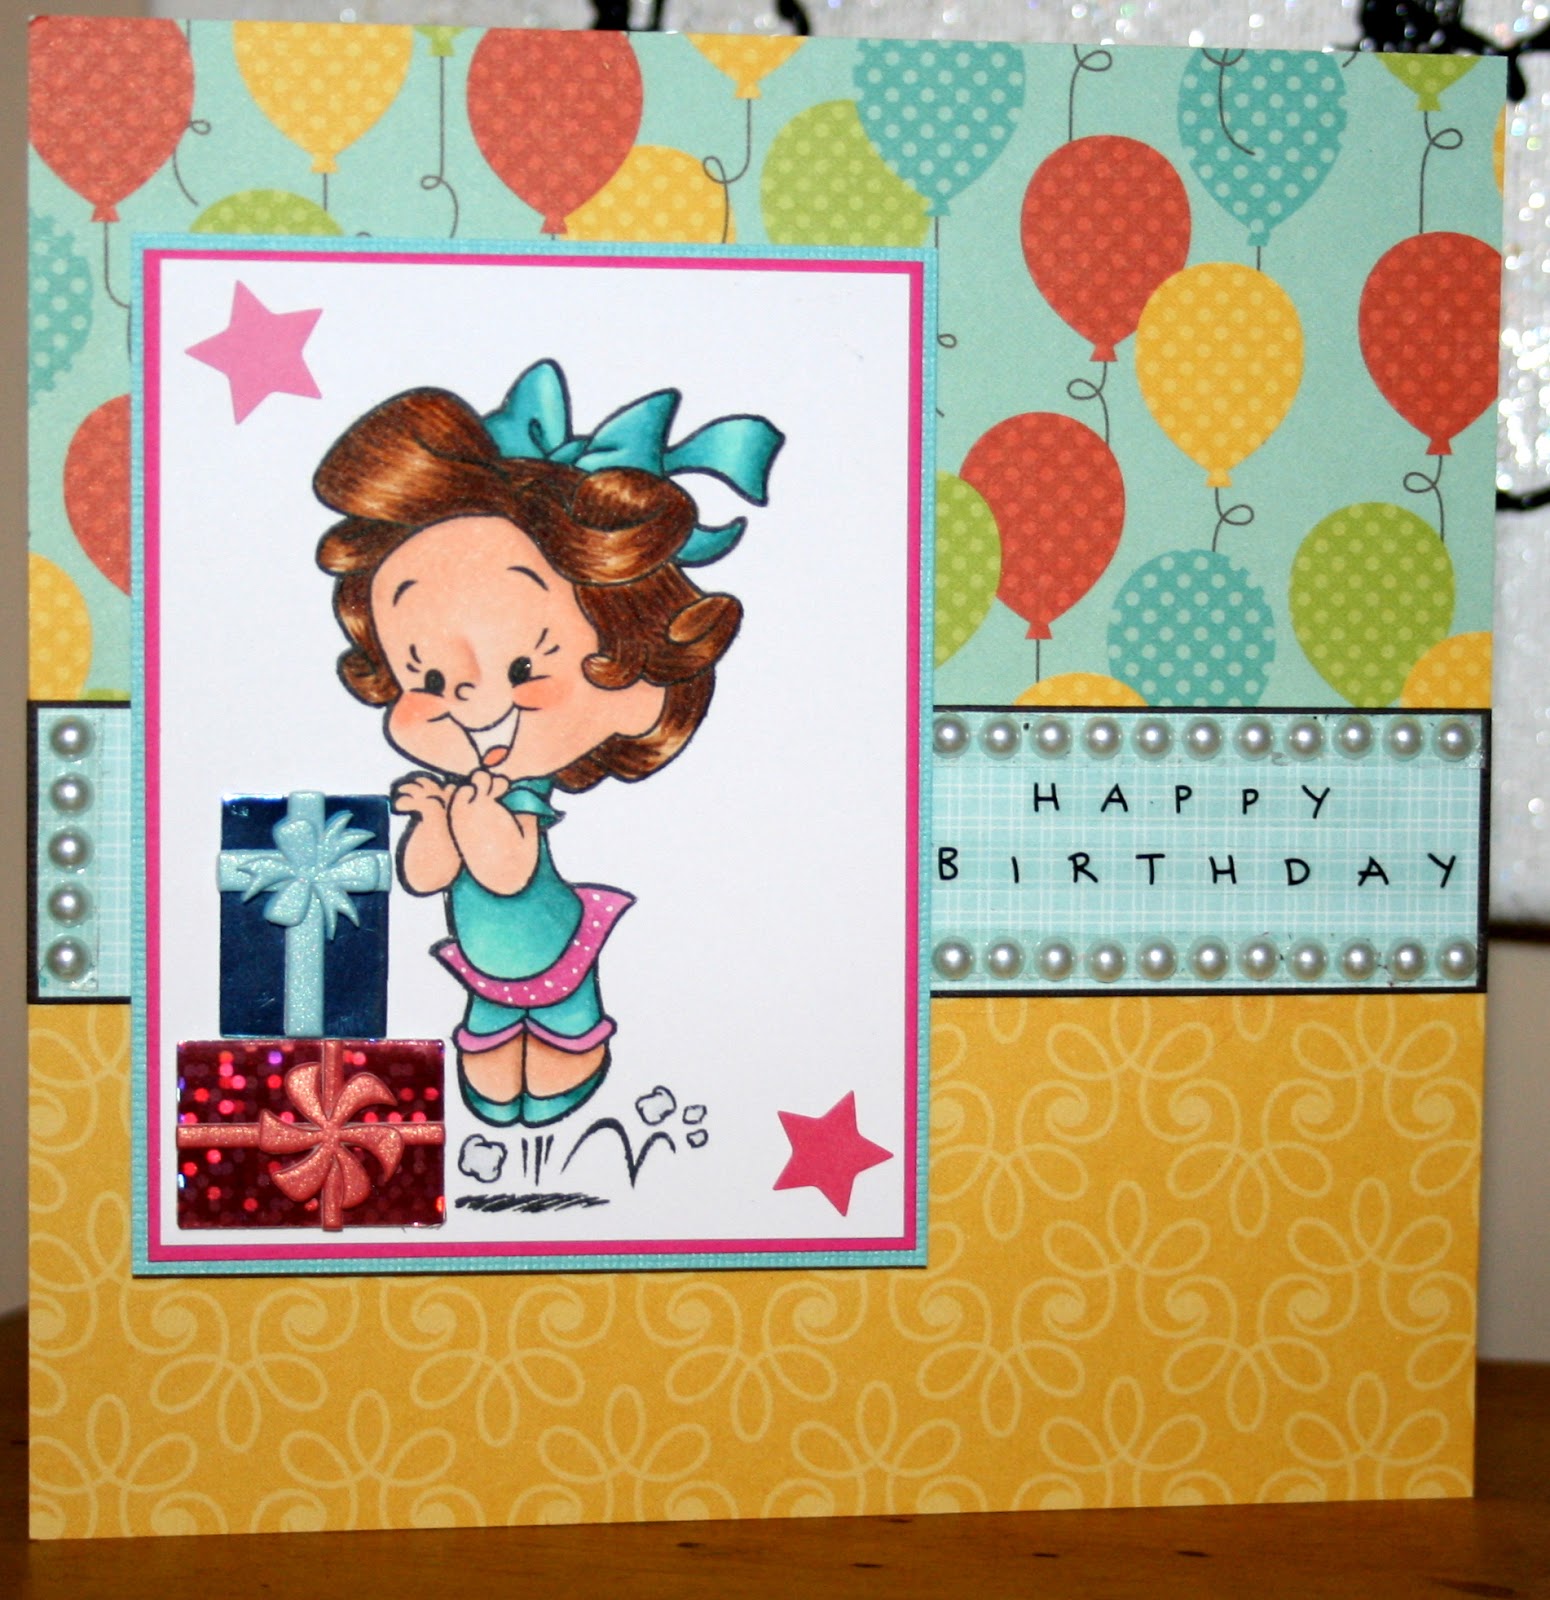 Simply Cute Cards: Happy birthday!